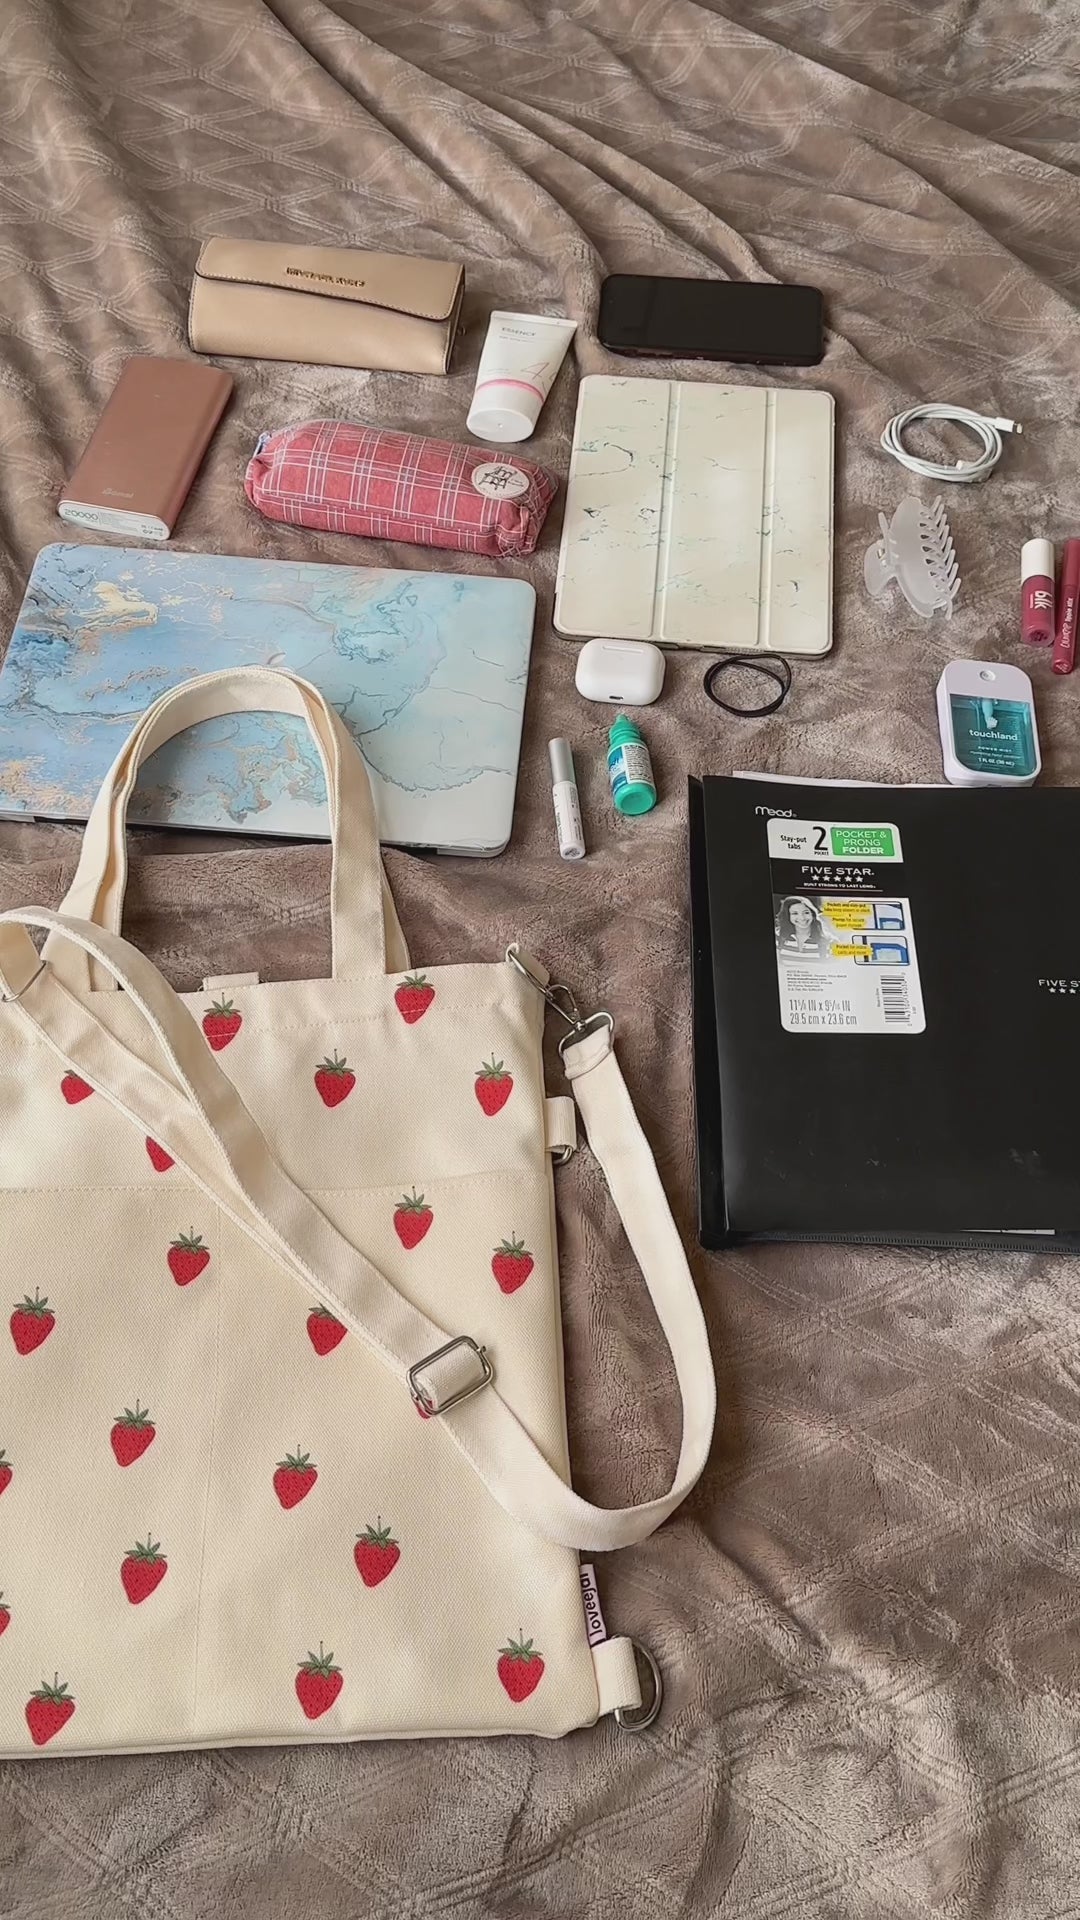 YOUI-GIFTS Handbags Set Clear PVC Shoulder Bag + Leather Bag strawberry  Printed Summer Tote Bag for Women 